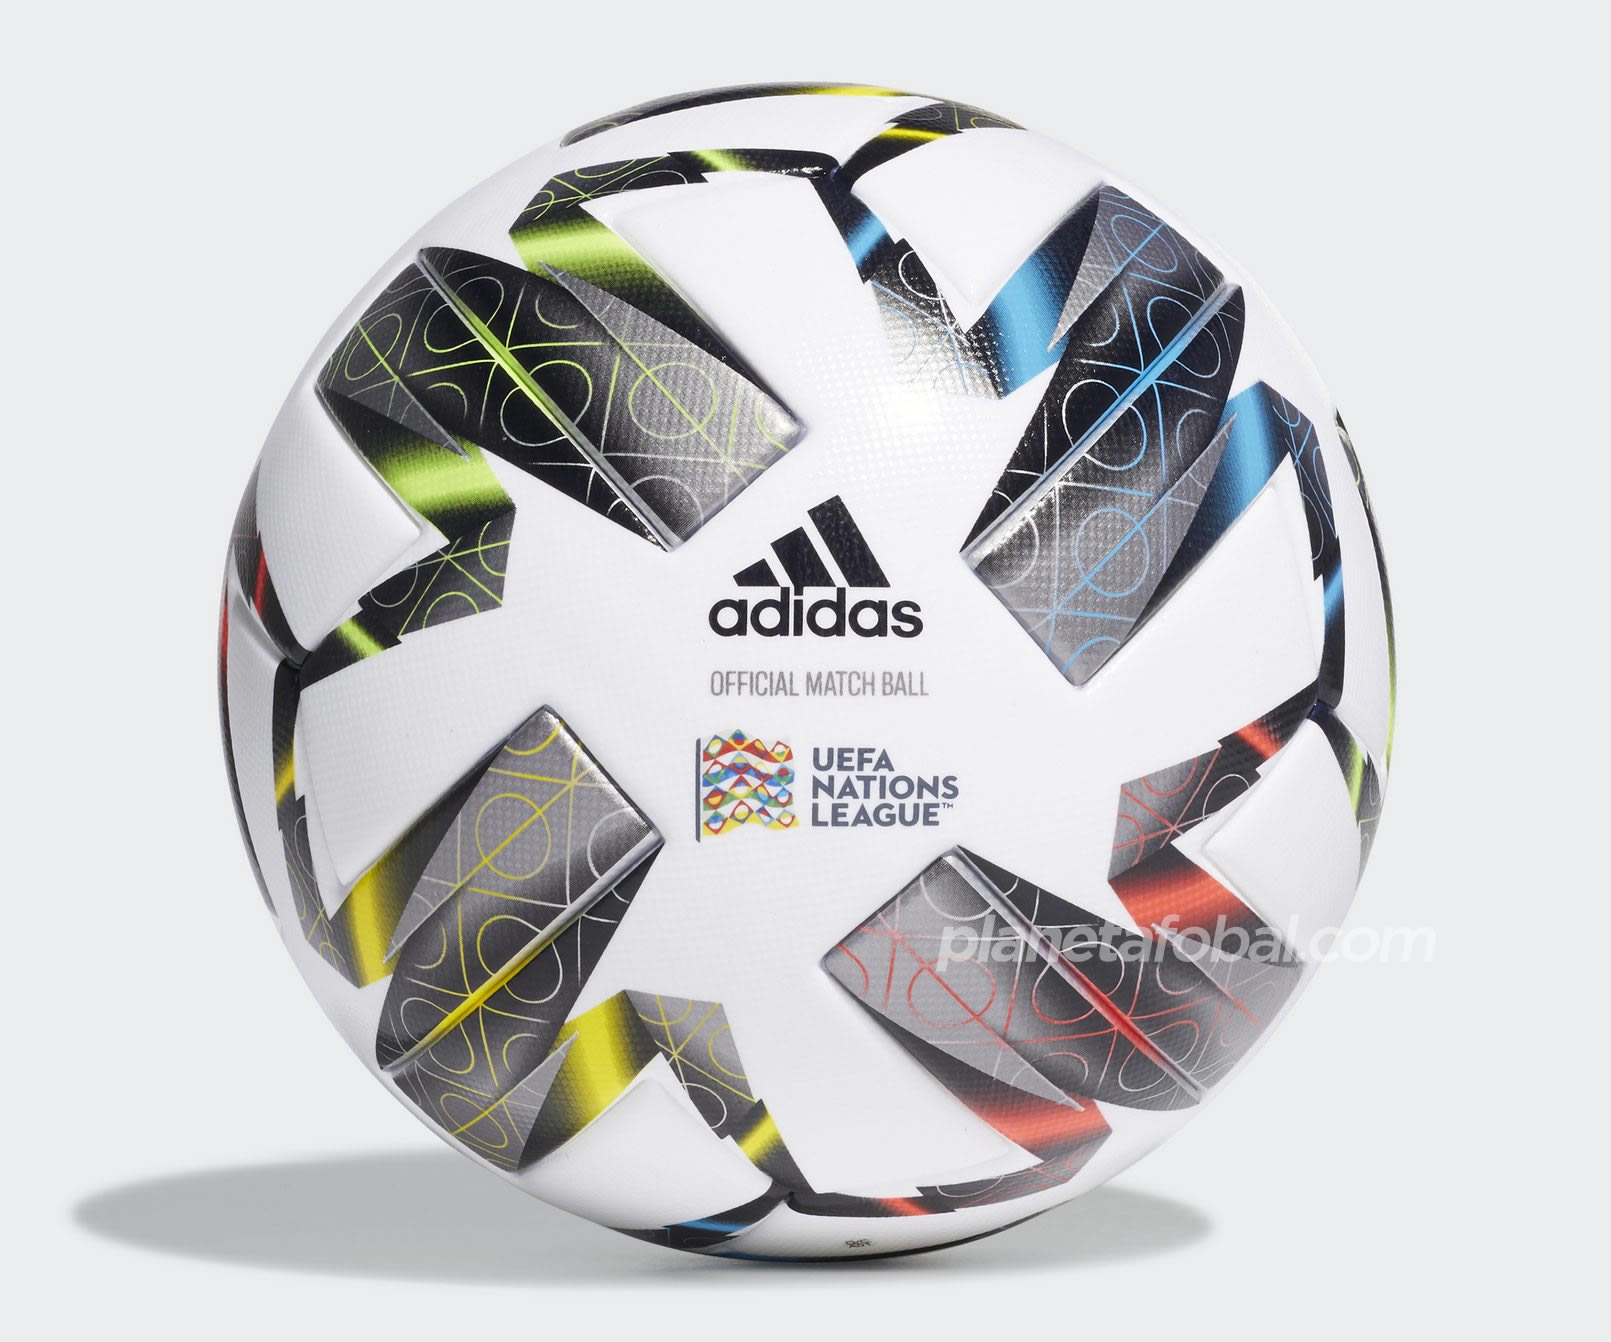 Balón Adidas de la UEFA Nations League 2020/21 | Imagen Twitter Oficial